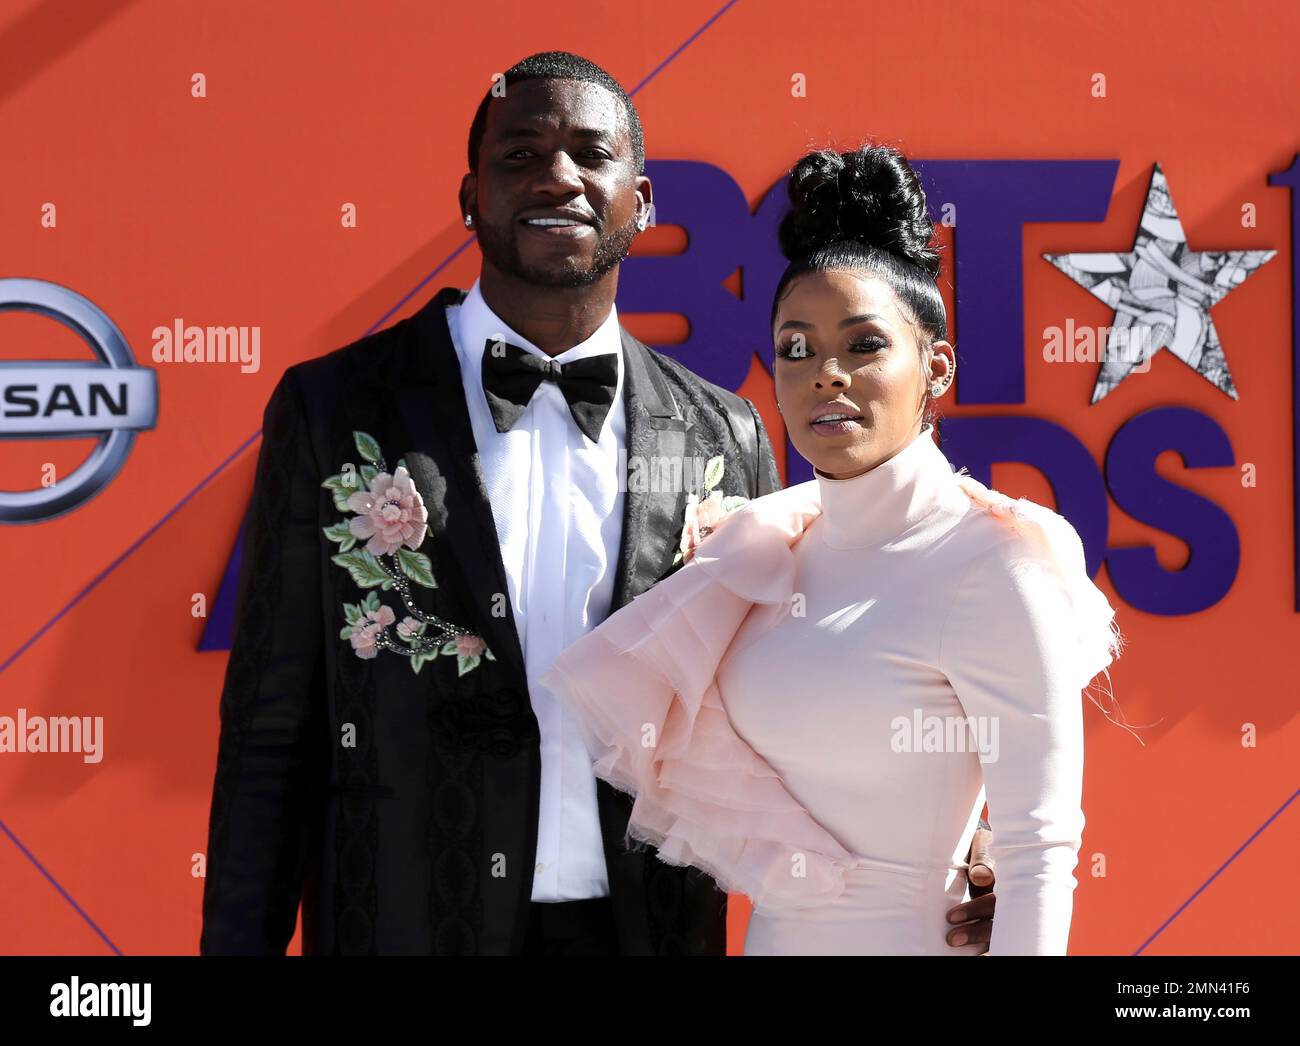 Gucci Mane And Keyshia Ka'Oir Serve Consistency On The VMA's Red Carpet